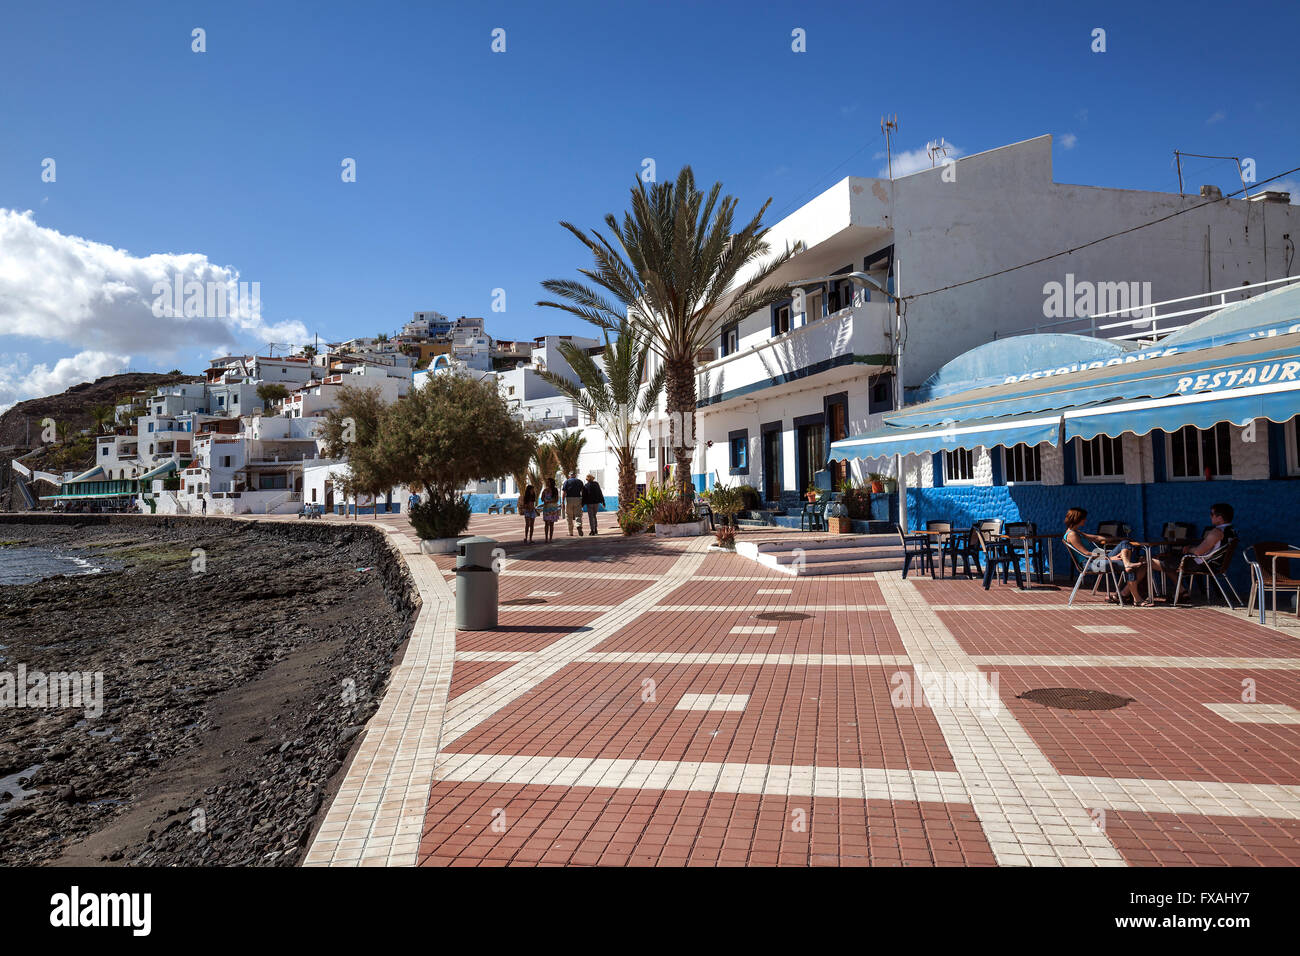 Promenade restaurant in the fishing village of Las Playitas, Fuerteventura,  Canary Islands, Spain Stock Photo - Alamy